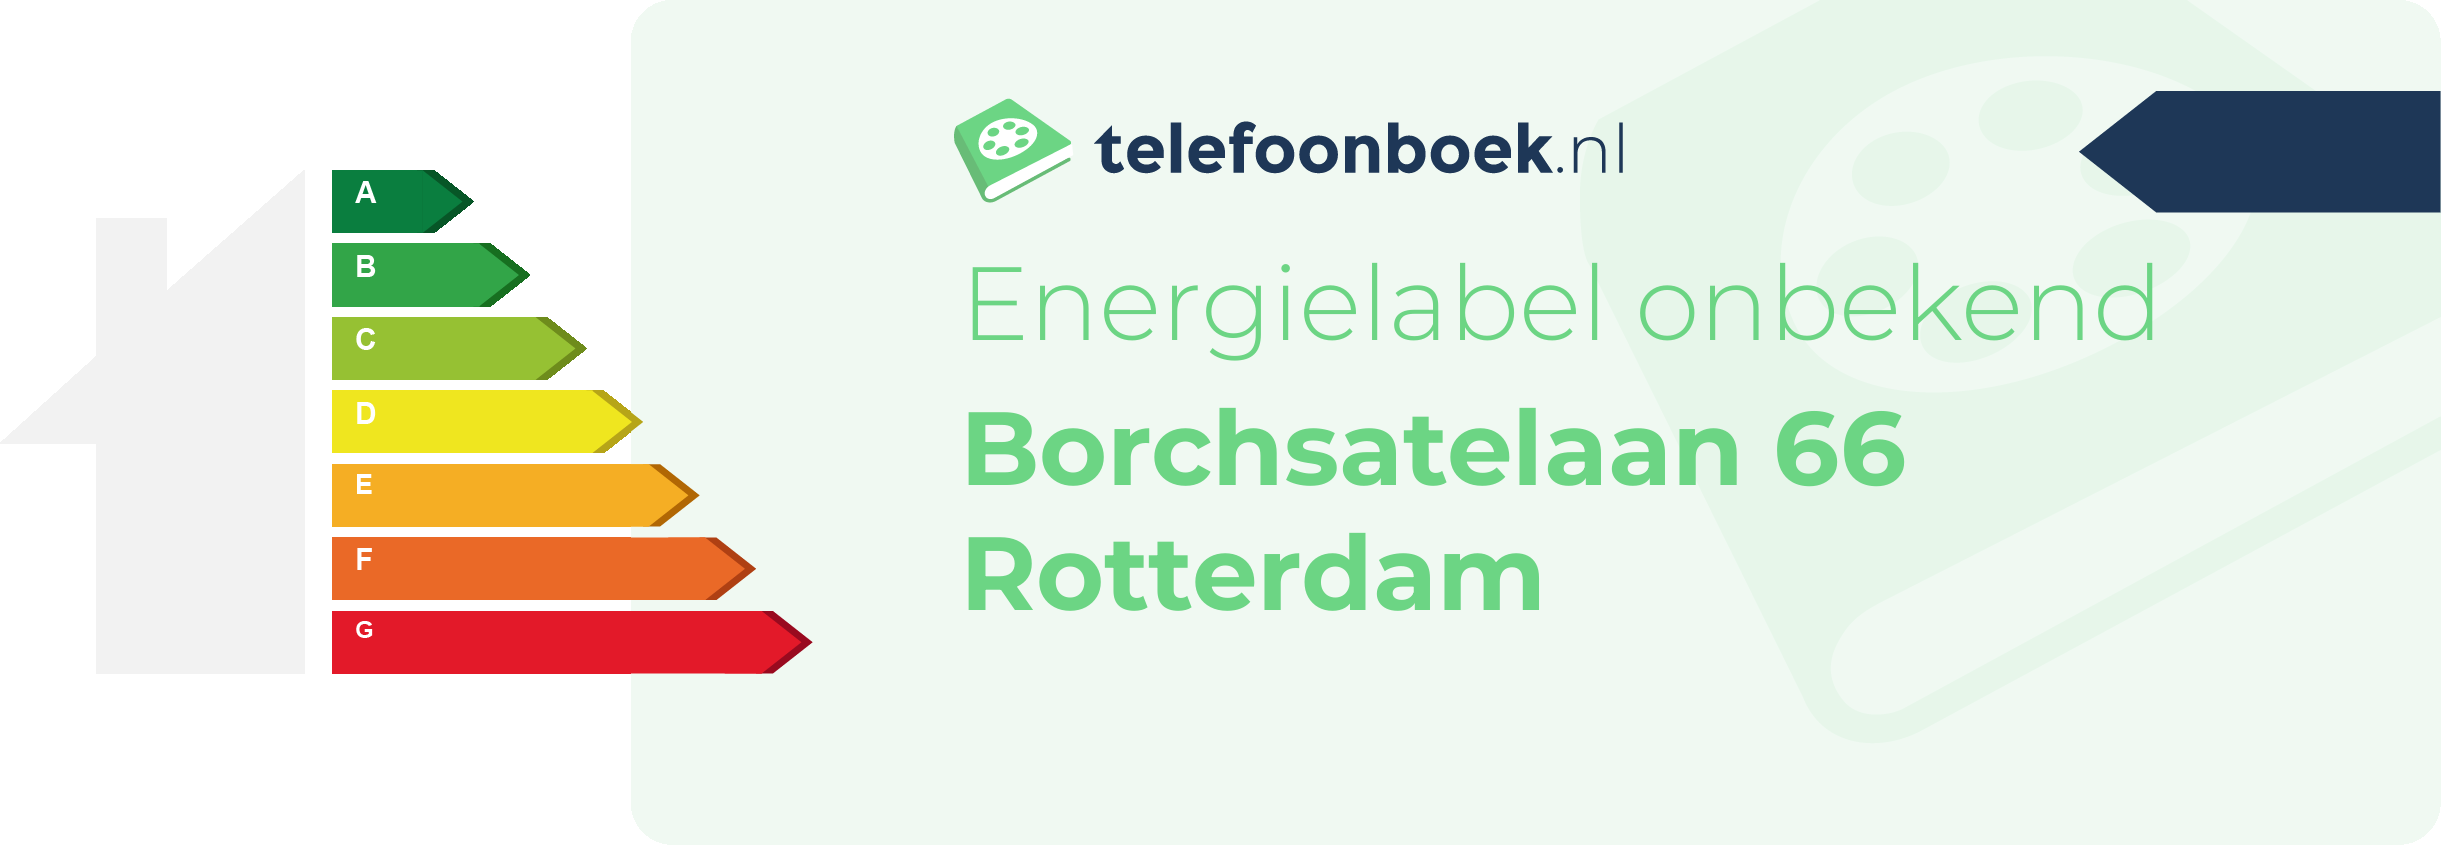 Energielabel Borchsatelaan 66 Rotterdam